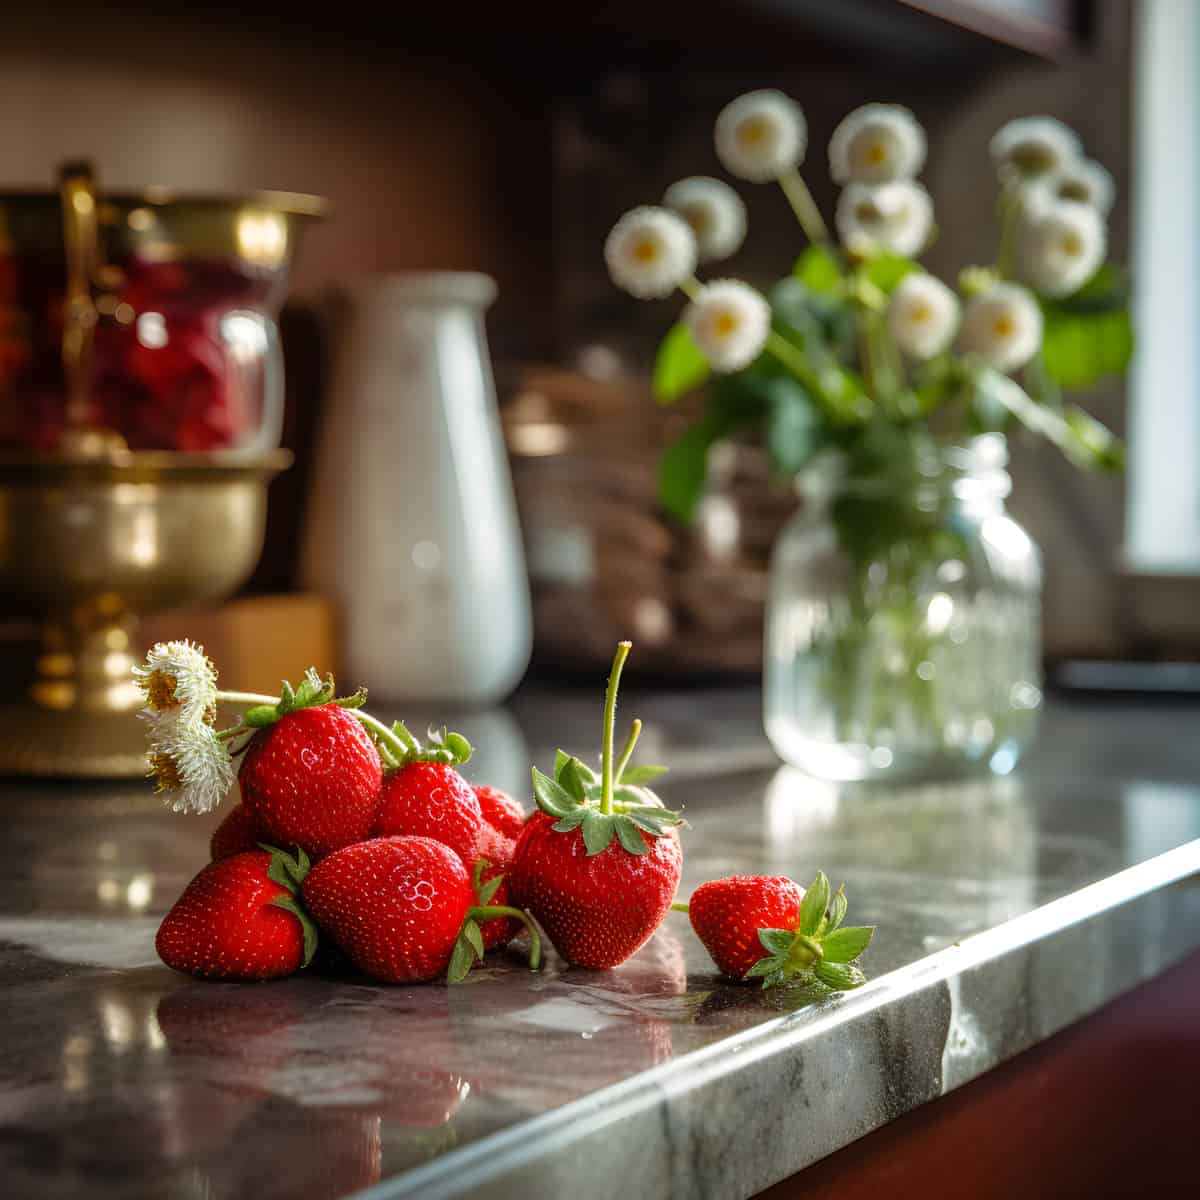 Wild Strawberries on a kitchen counter